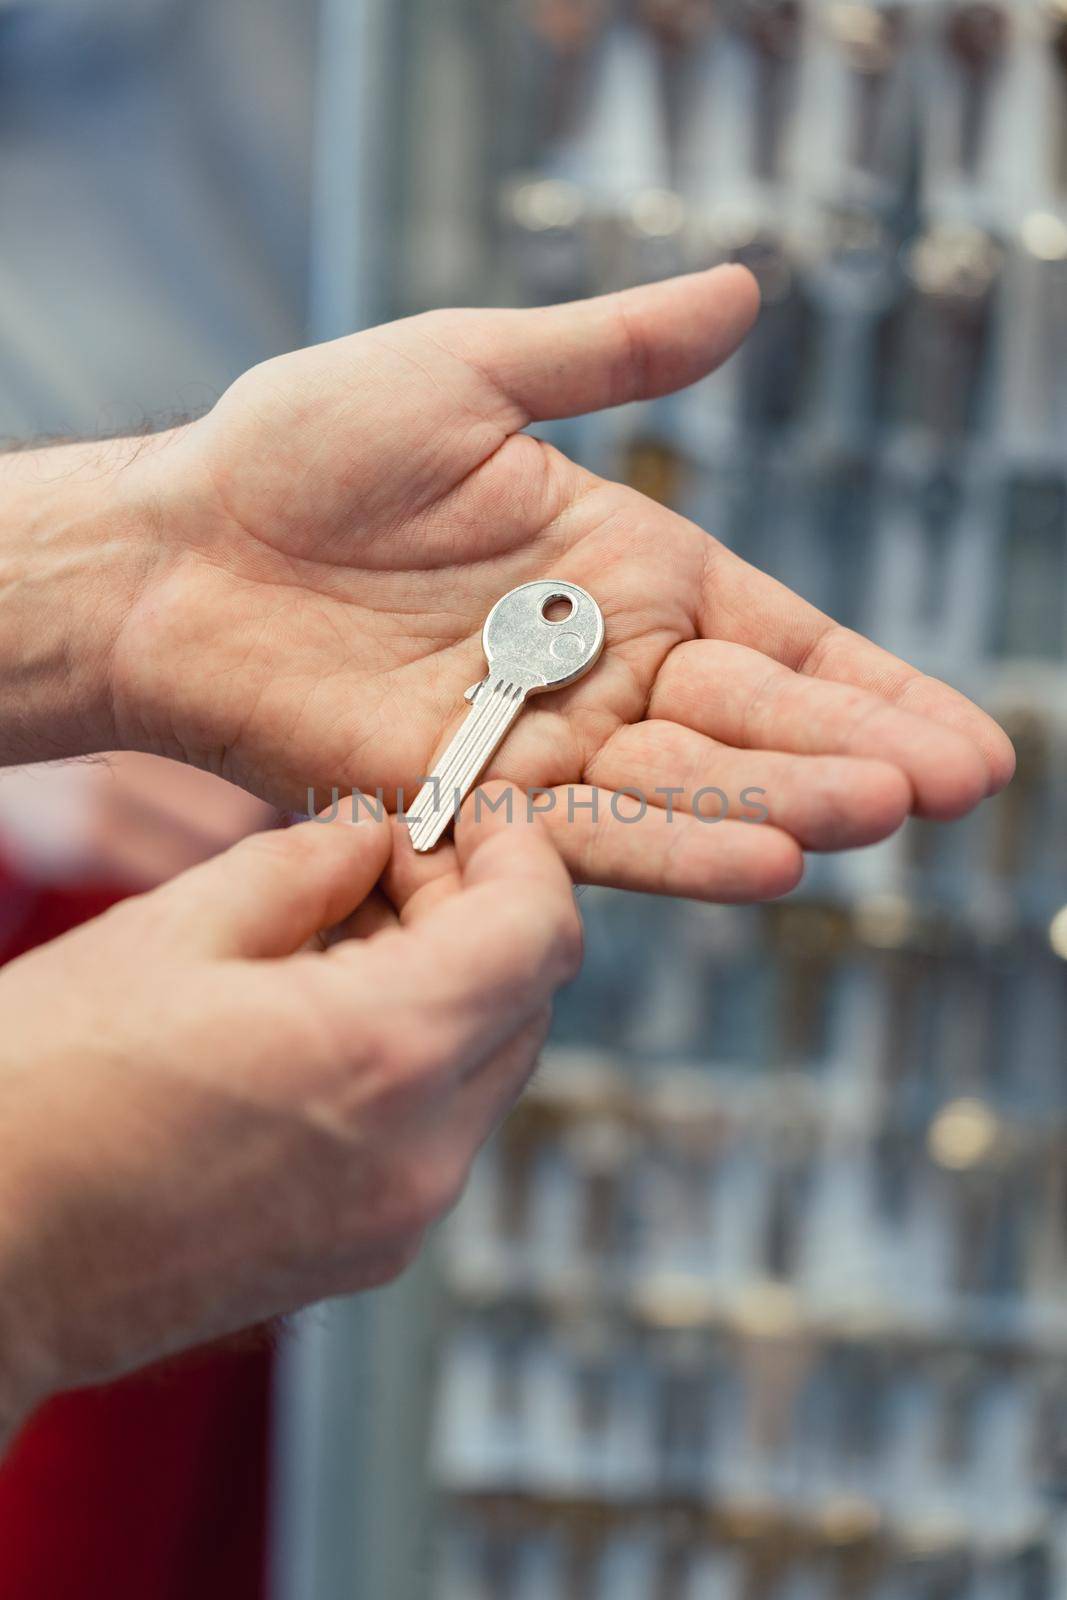 Locksmith with key blanks in his shop by Kzenon